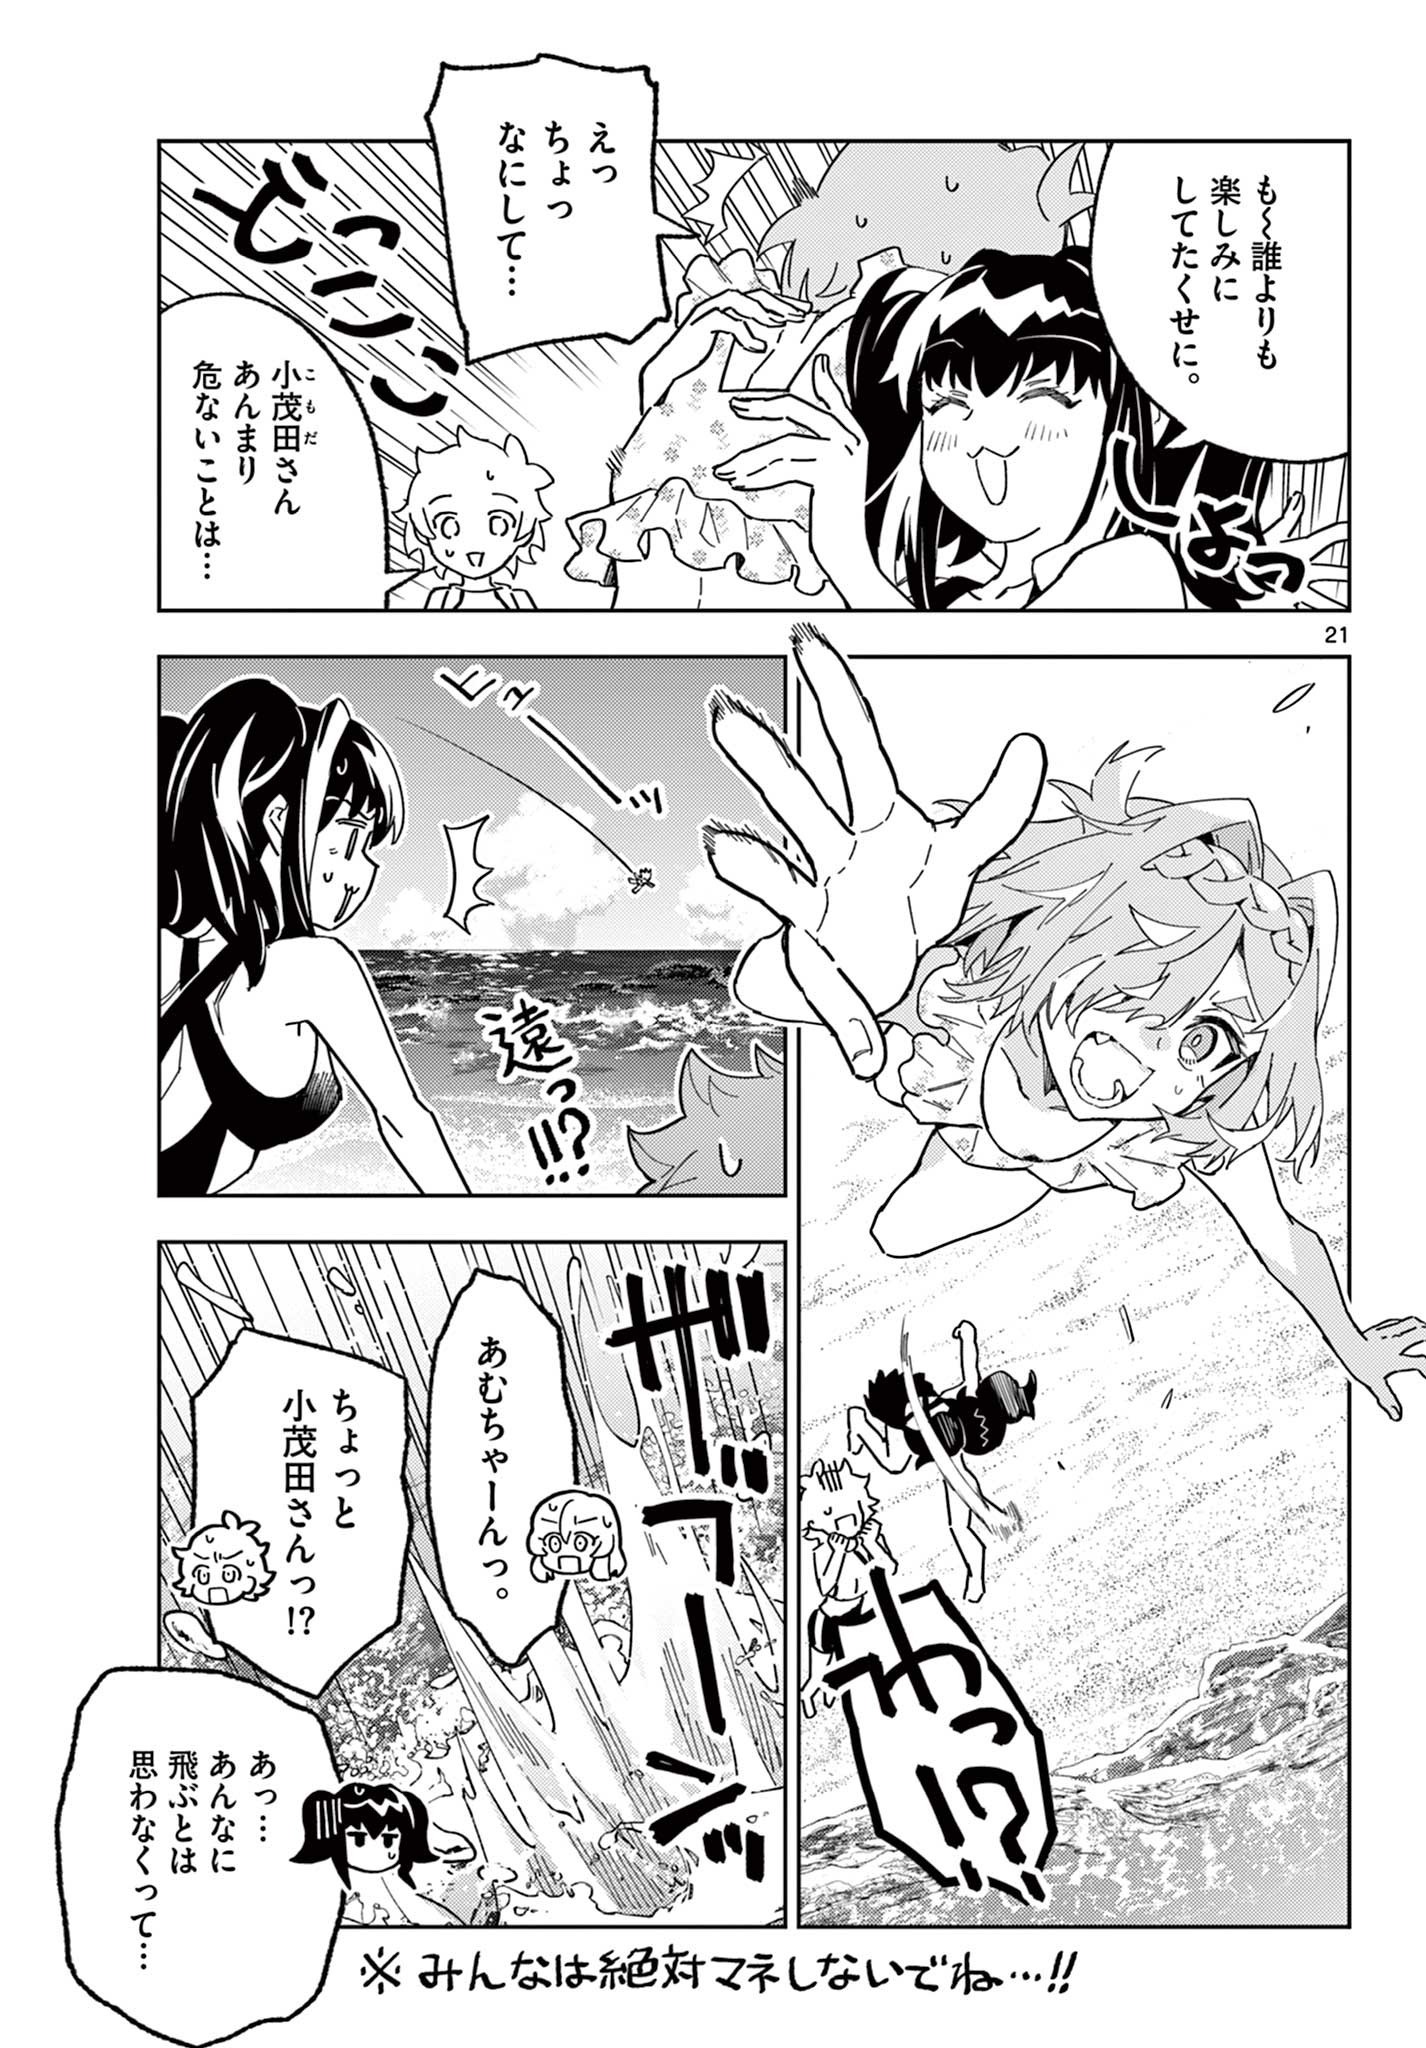 Gareki! Modeller Girls no Houkago - Chapter 16 - Page 21